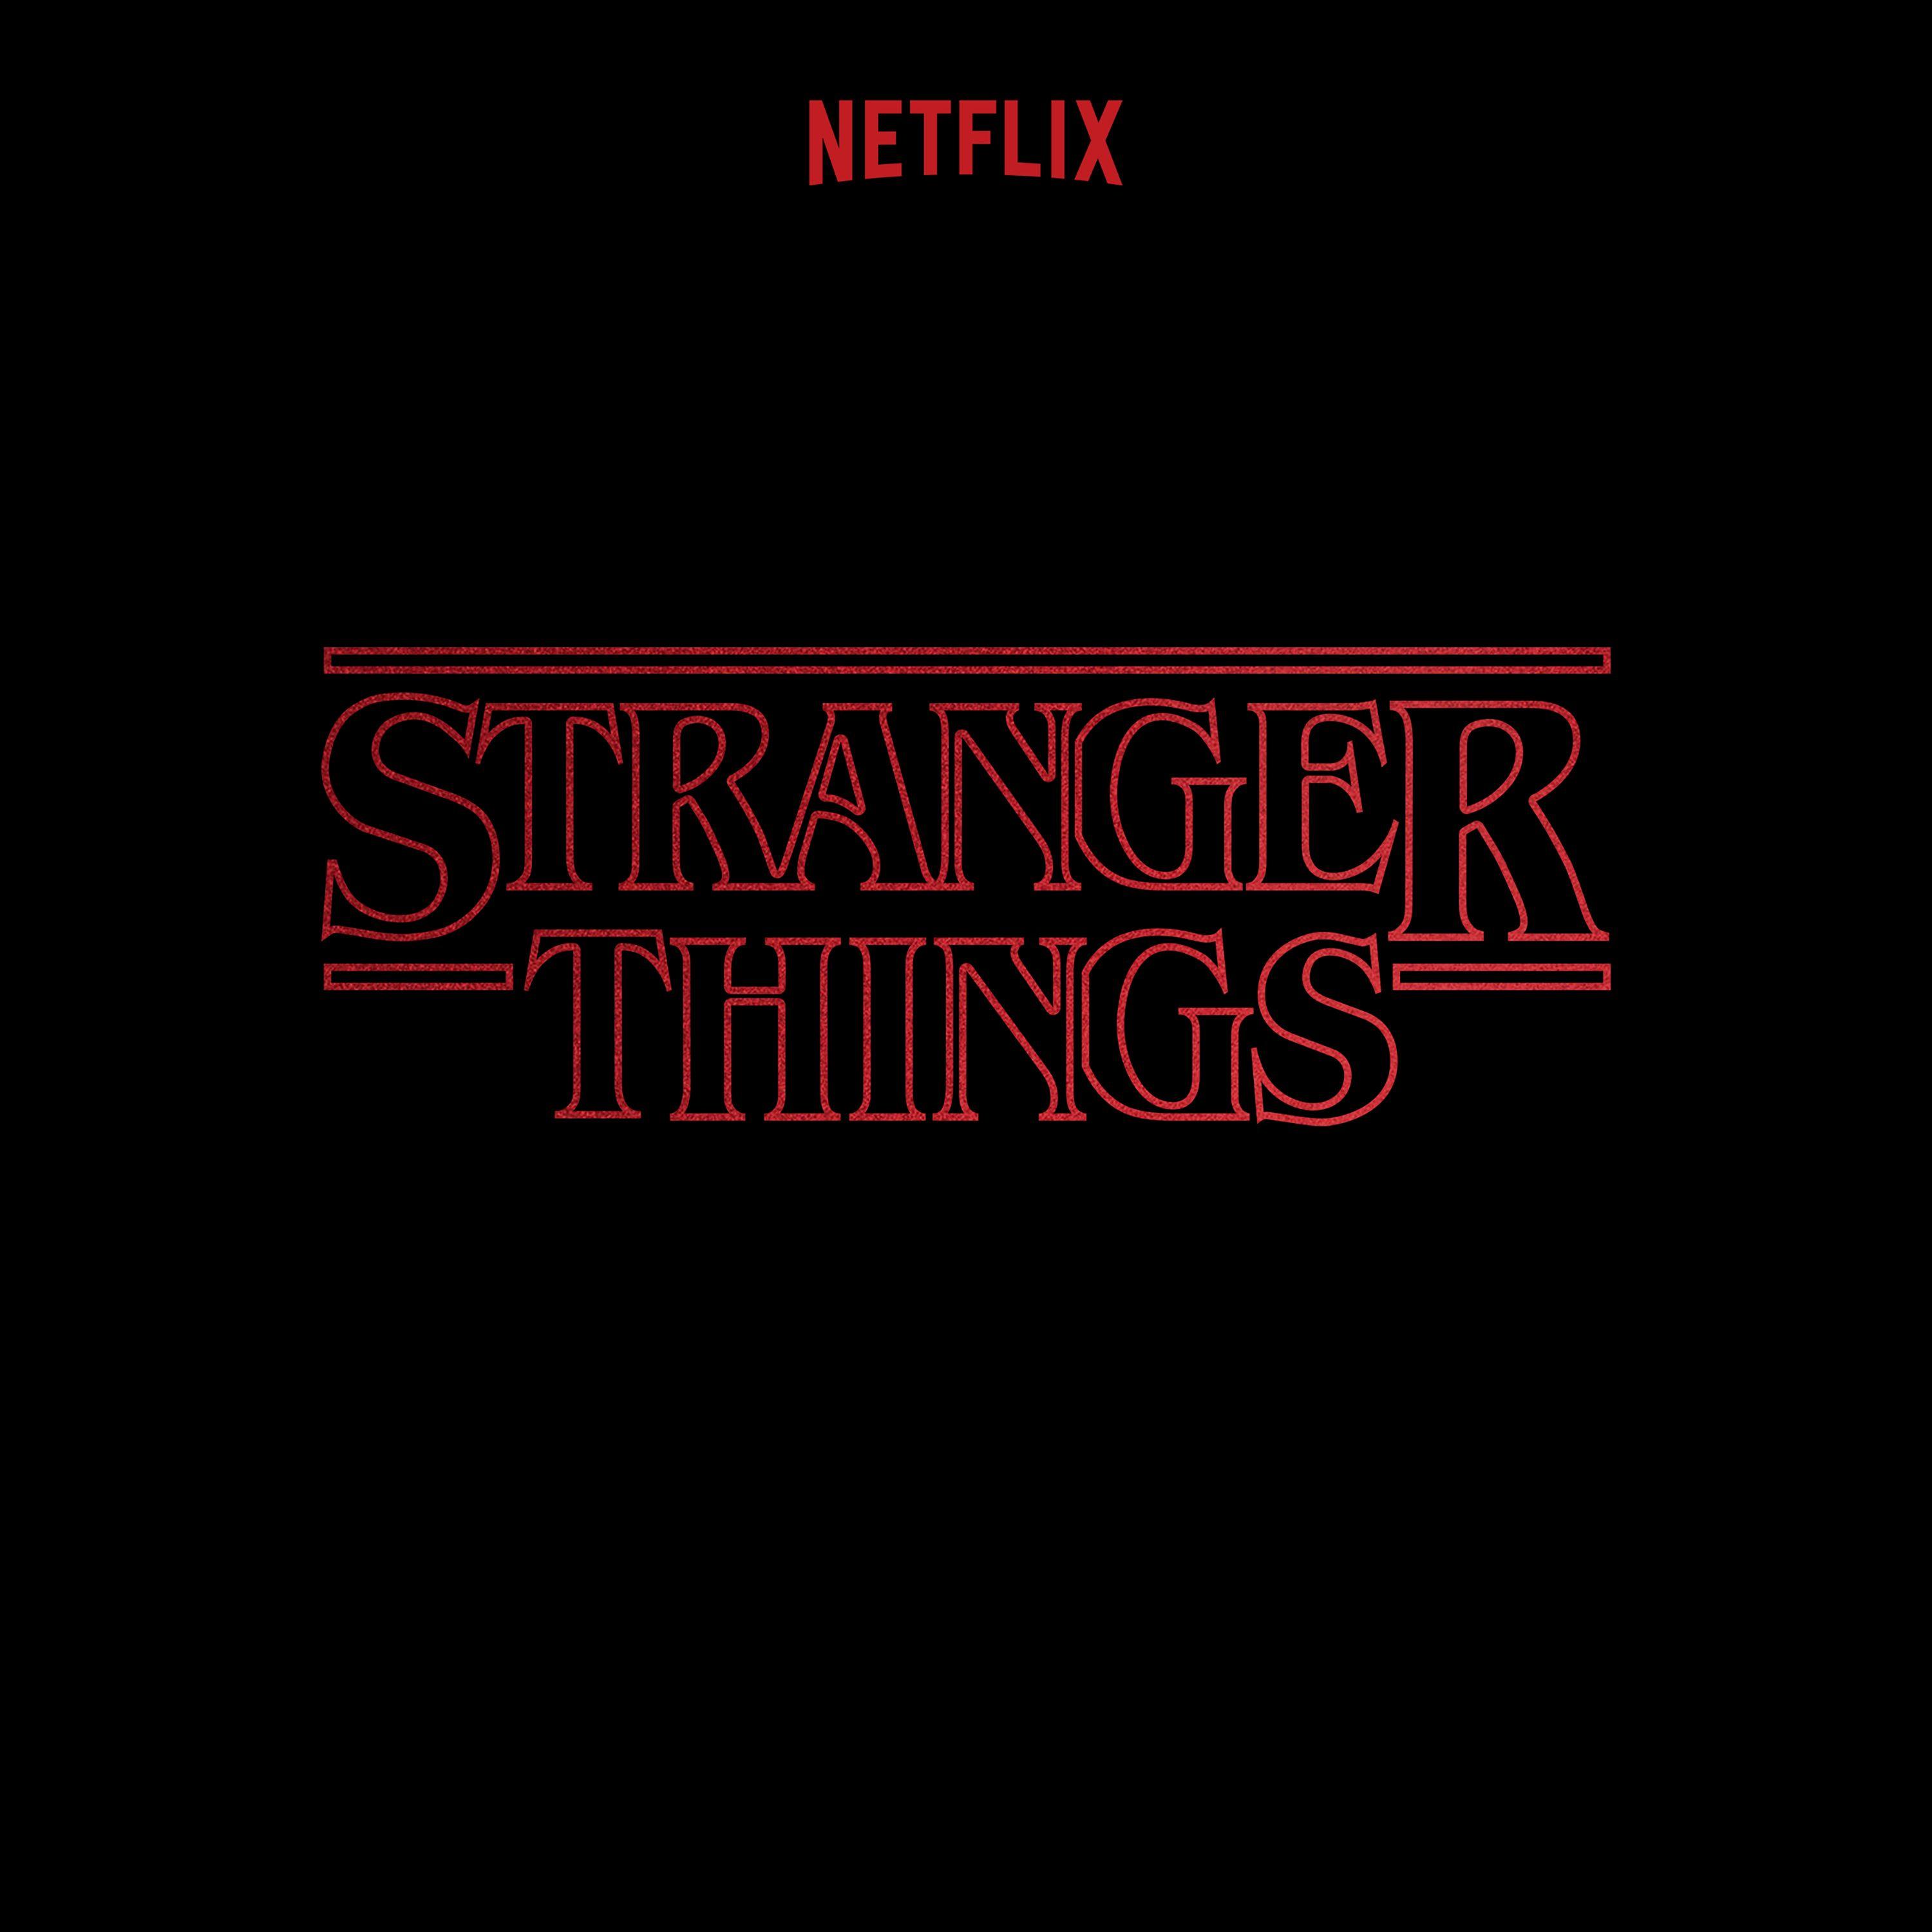 Netflix Original Logo - Stranger Things Season 1 Box Set (A Netflix Original Series Soundtrack)